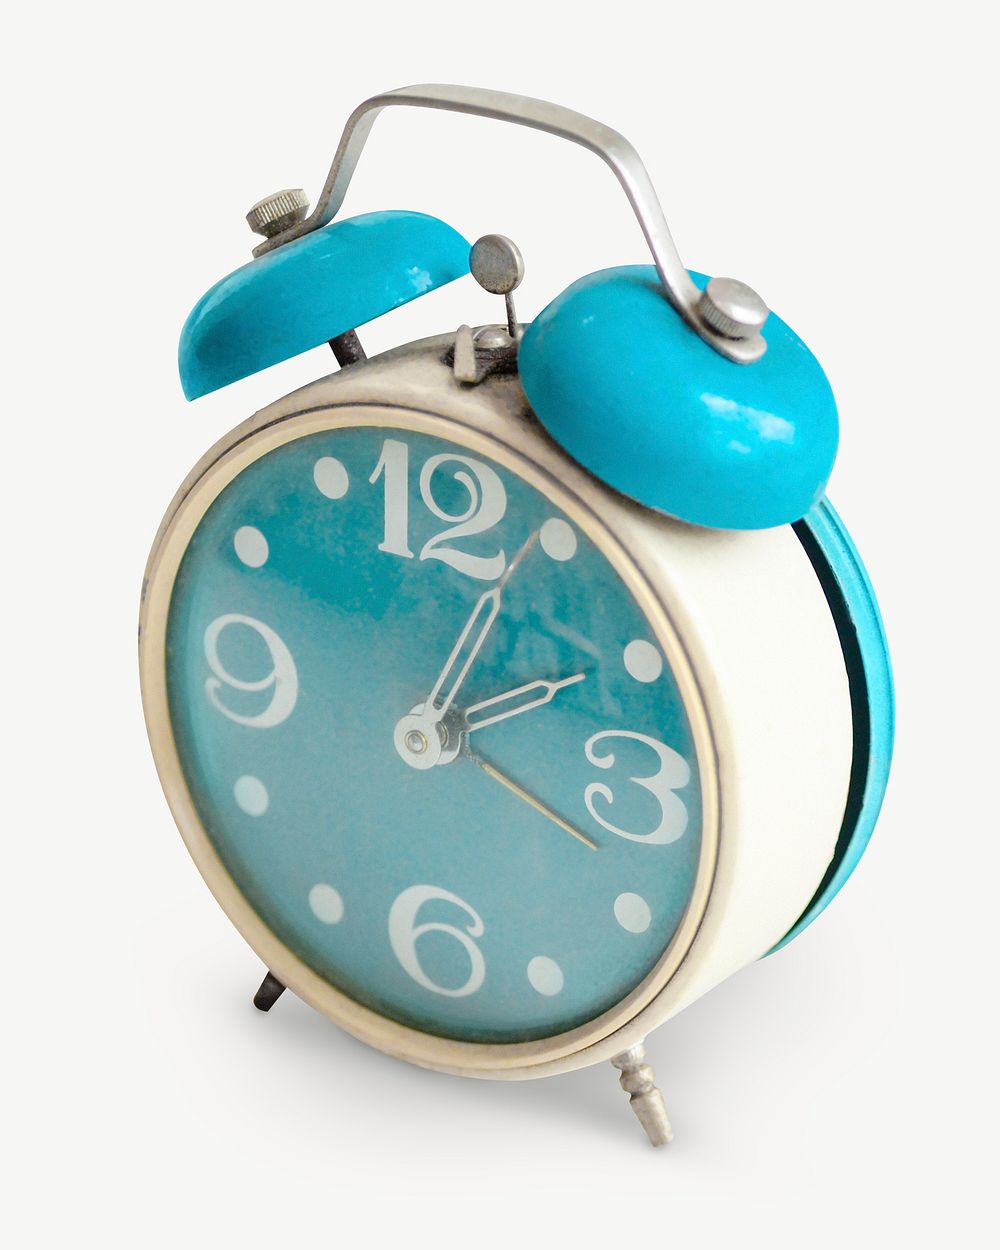 Blue retro bedroom alarm clock collage element psd